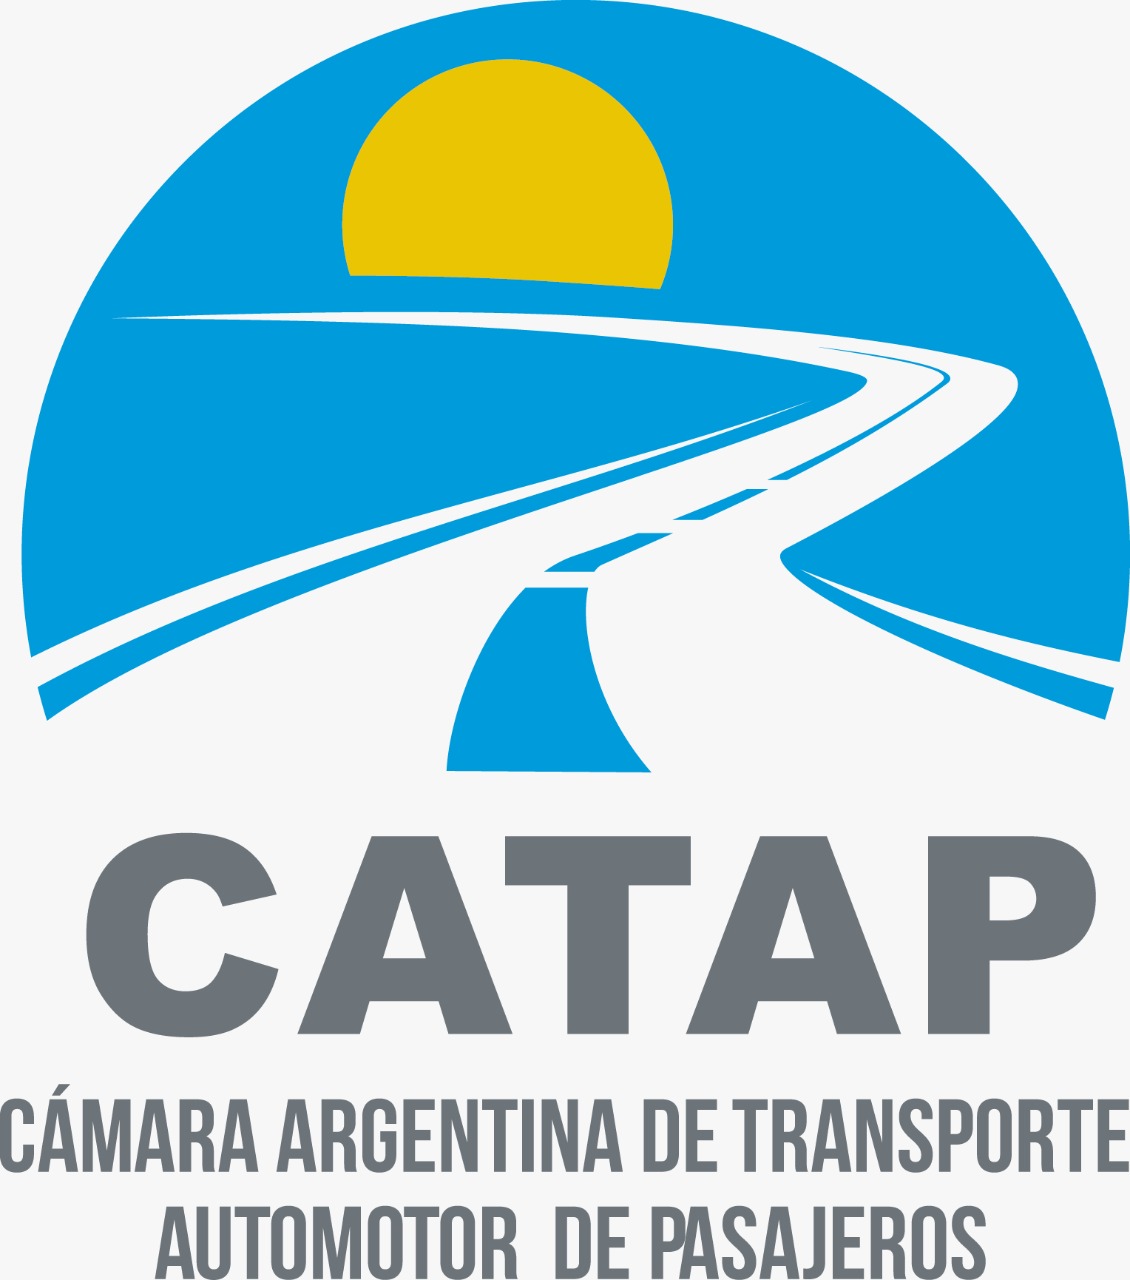 CATAP logo